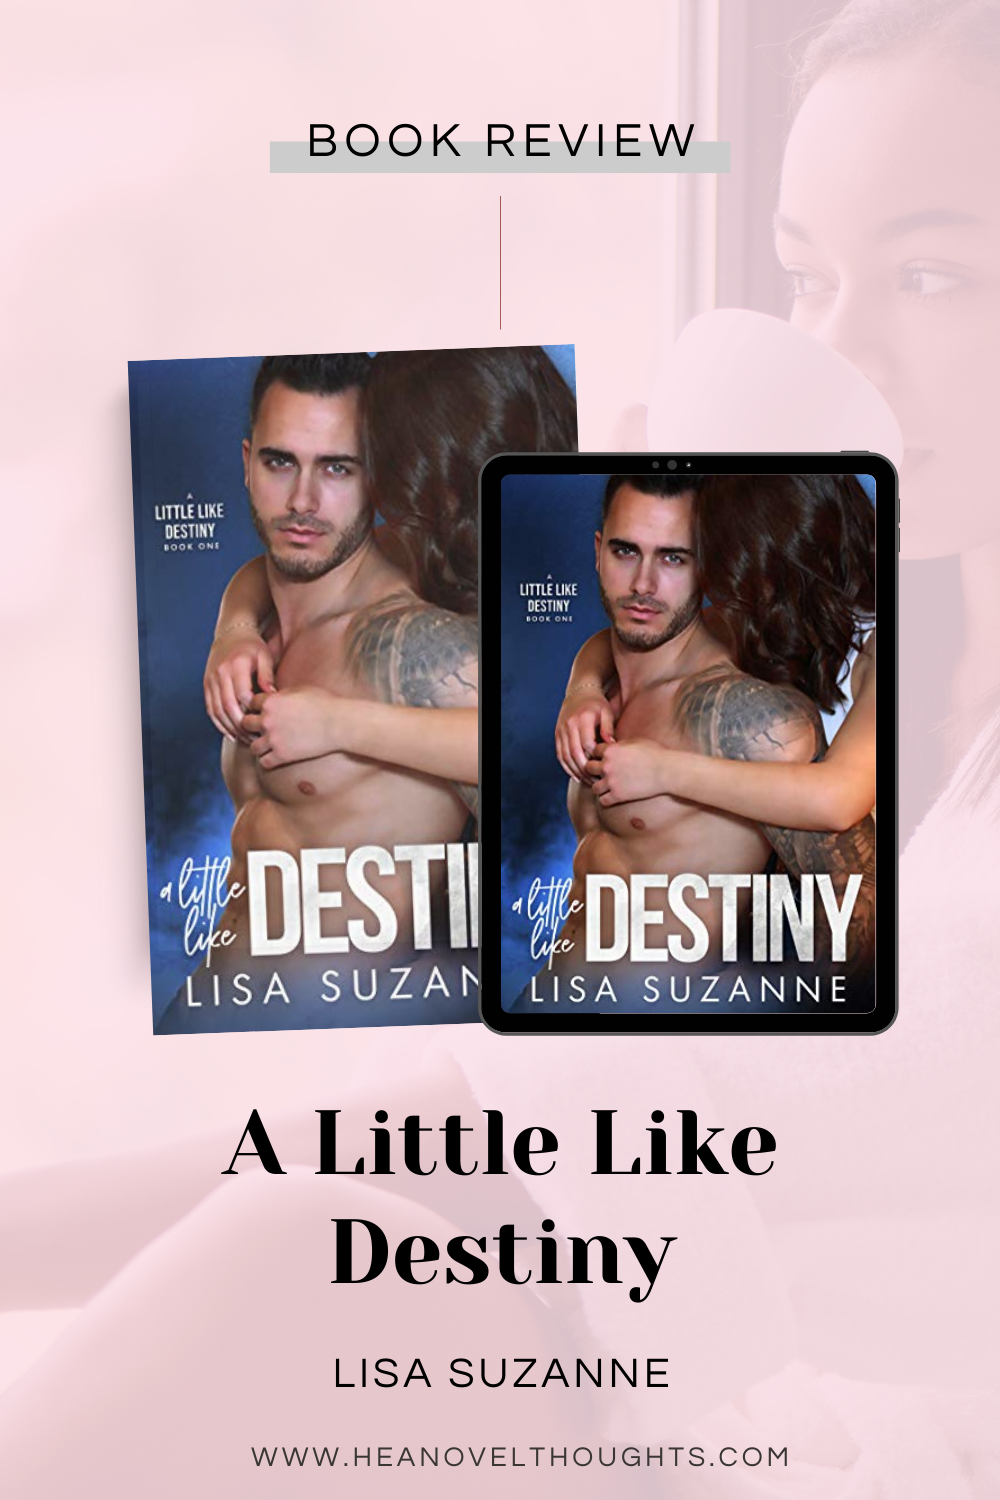 A Little Like Destiny by Lisa Suzanne